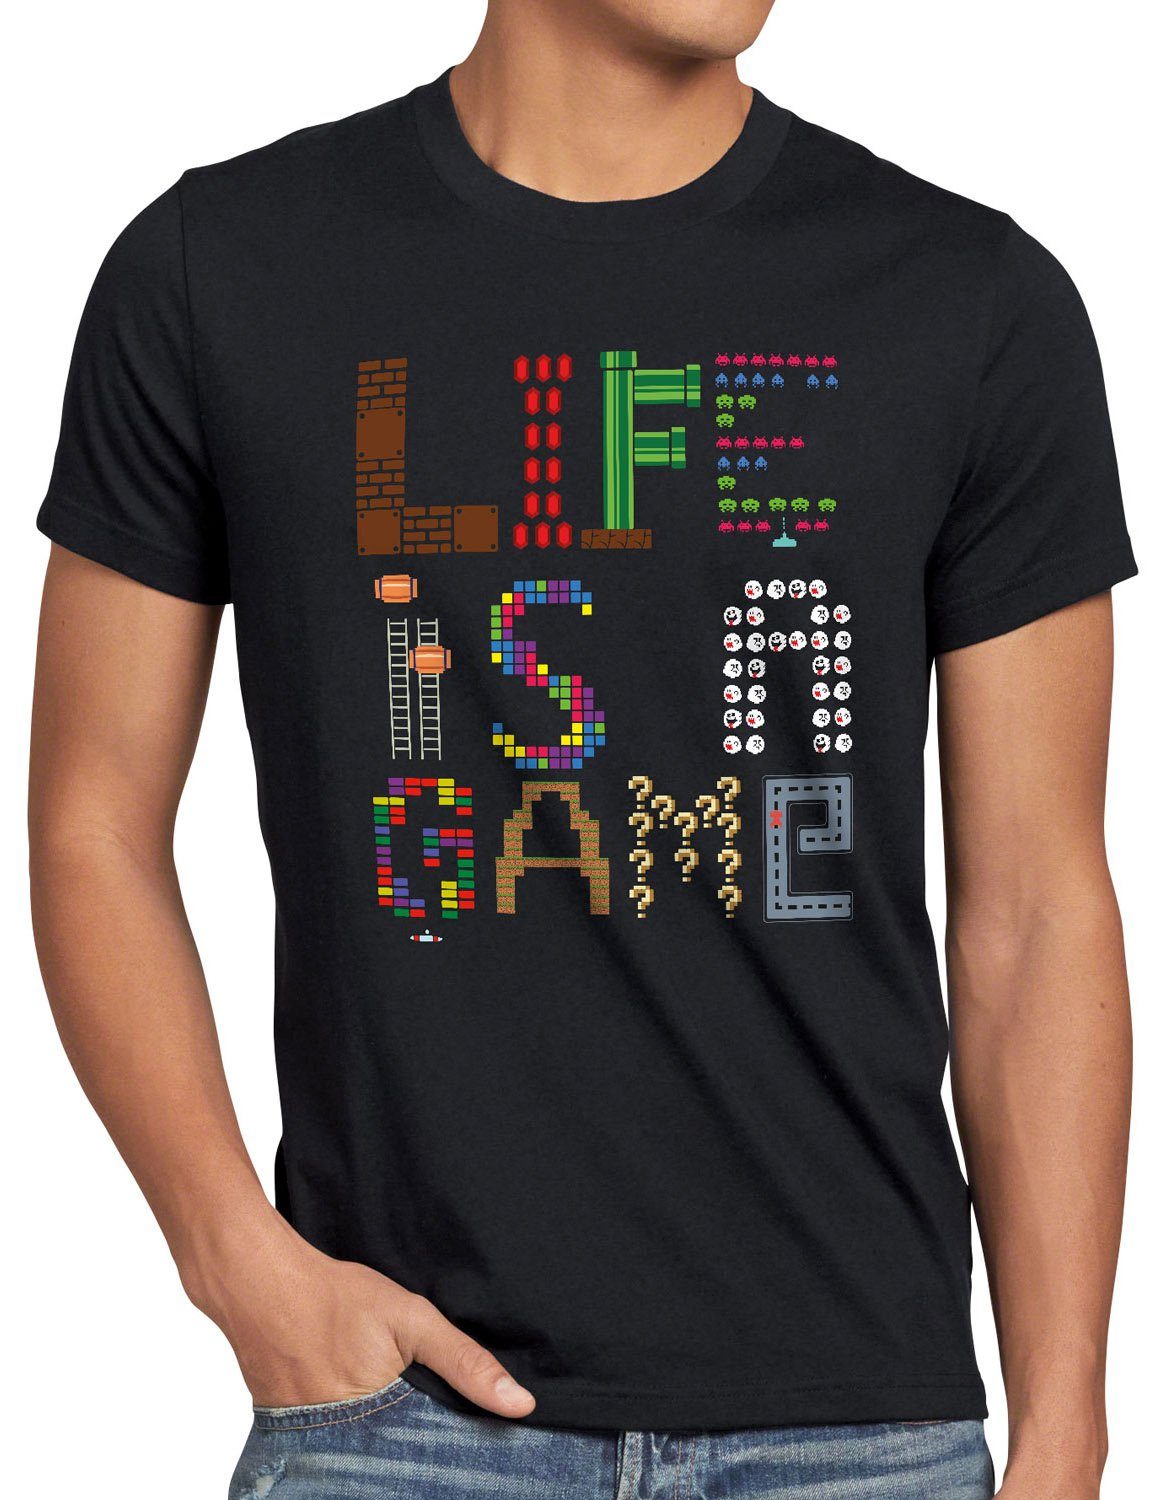 Print-Shirt Pixel mario zelda is schwarz a style3 T-Shirt Jungen Boy Spiel Gamer Game Konsole Life Herren